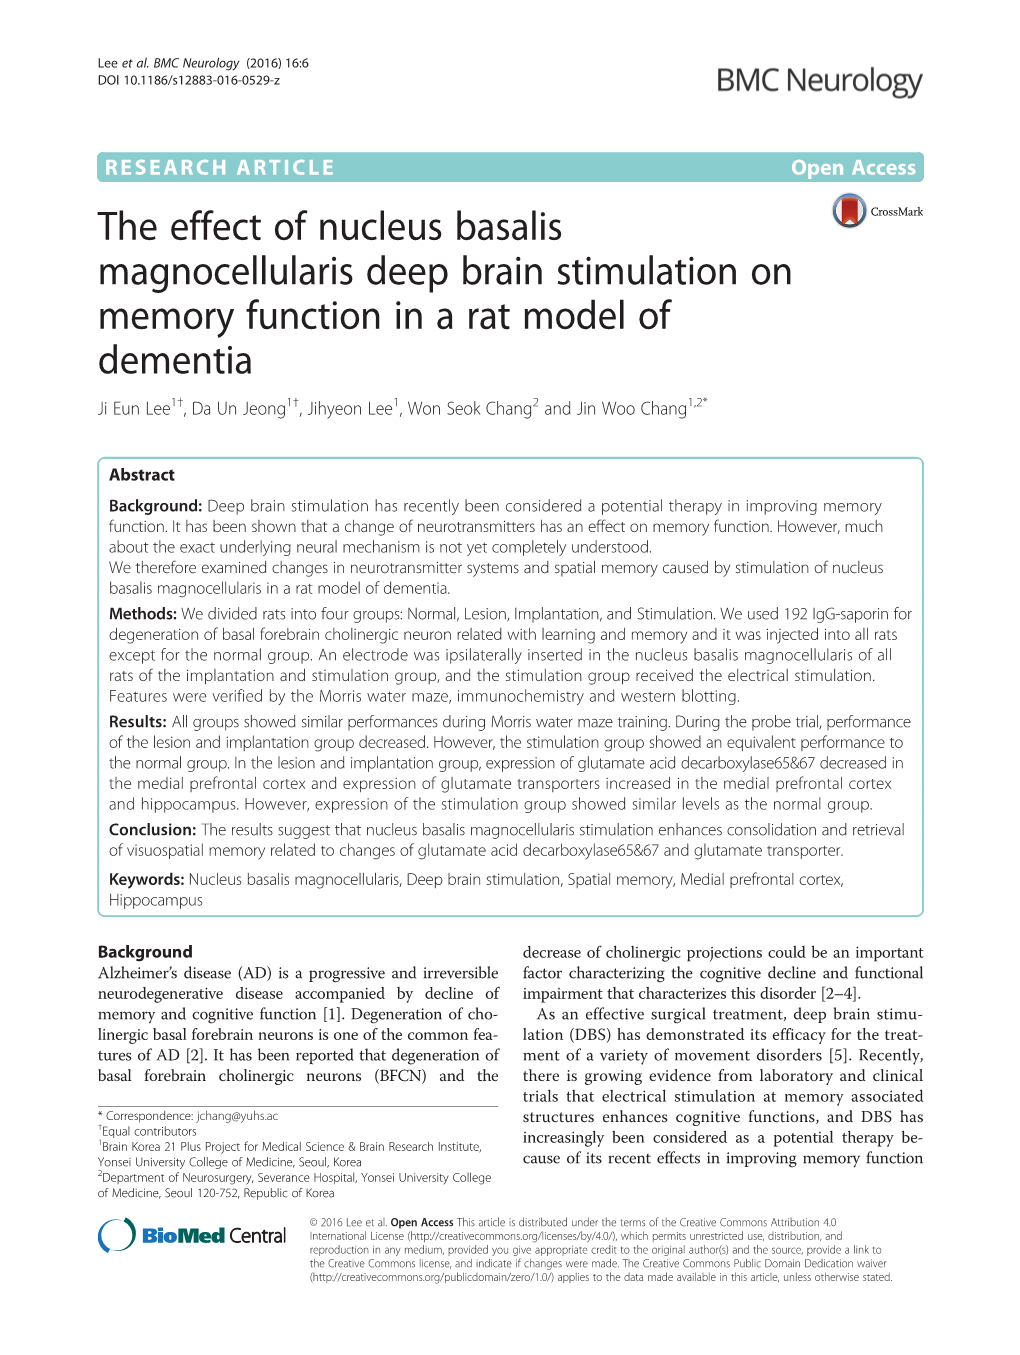 The Effect of Nucleus Basalis Magnocellularis Deep Brain